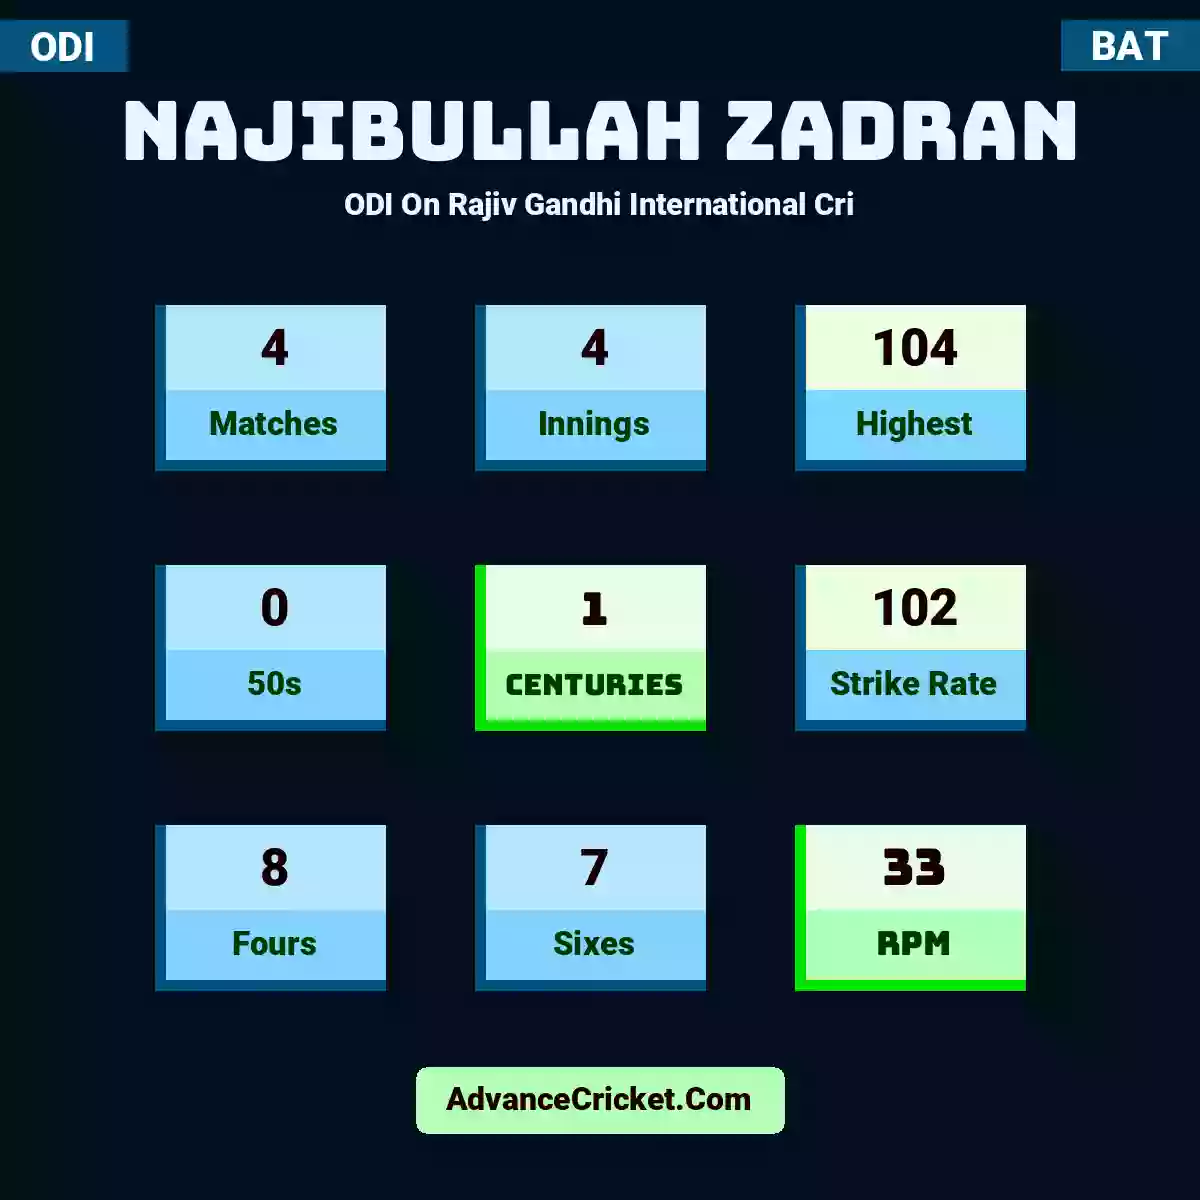 Najibullah Zadran ODI  On Rajiv Gandhi International Cri, Najibullah Zadran played 4 matches, scored 104 runs as highest, 0 half-centuries, and 1 centuries, with a strike rate of 102. N.Zadran hit 8 fours and 7 sixes, with an RPM of 33.